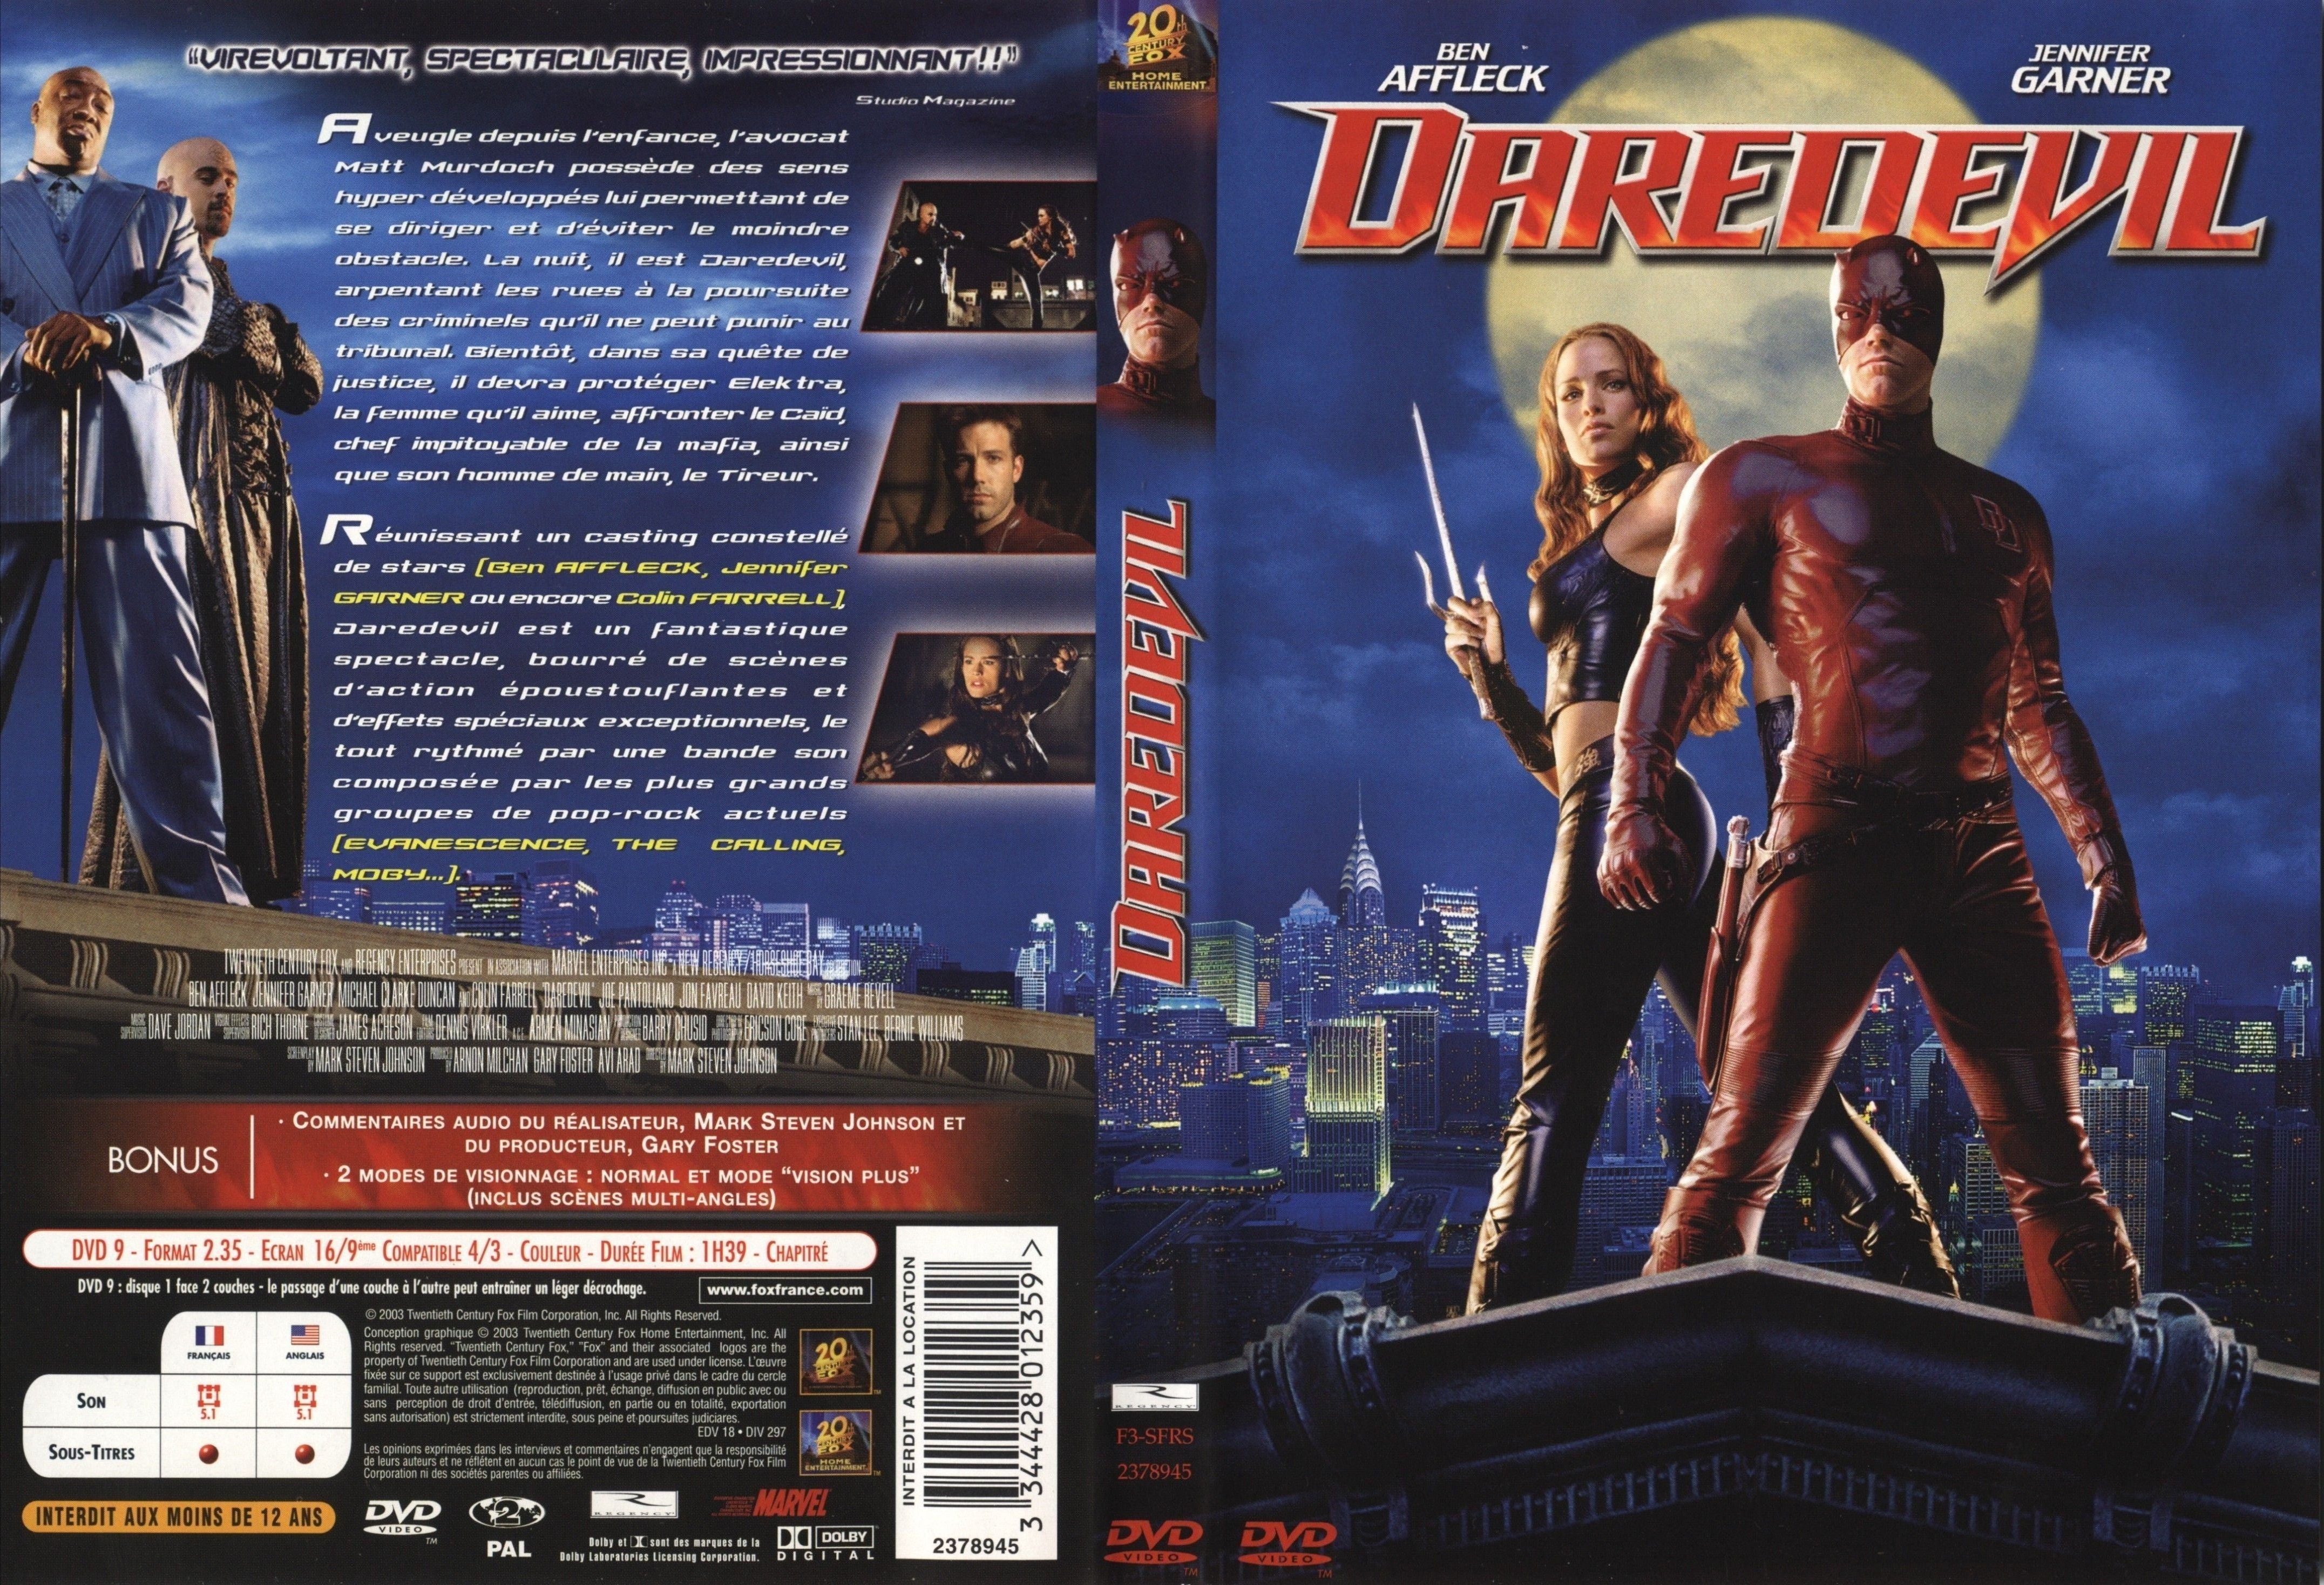 Jaquette DVD Daredevil v2